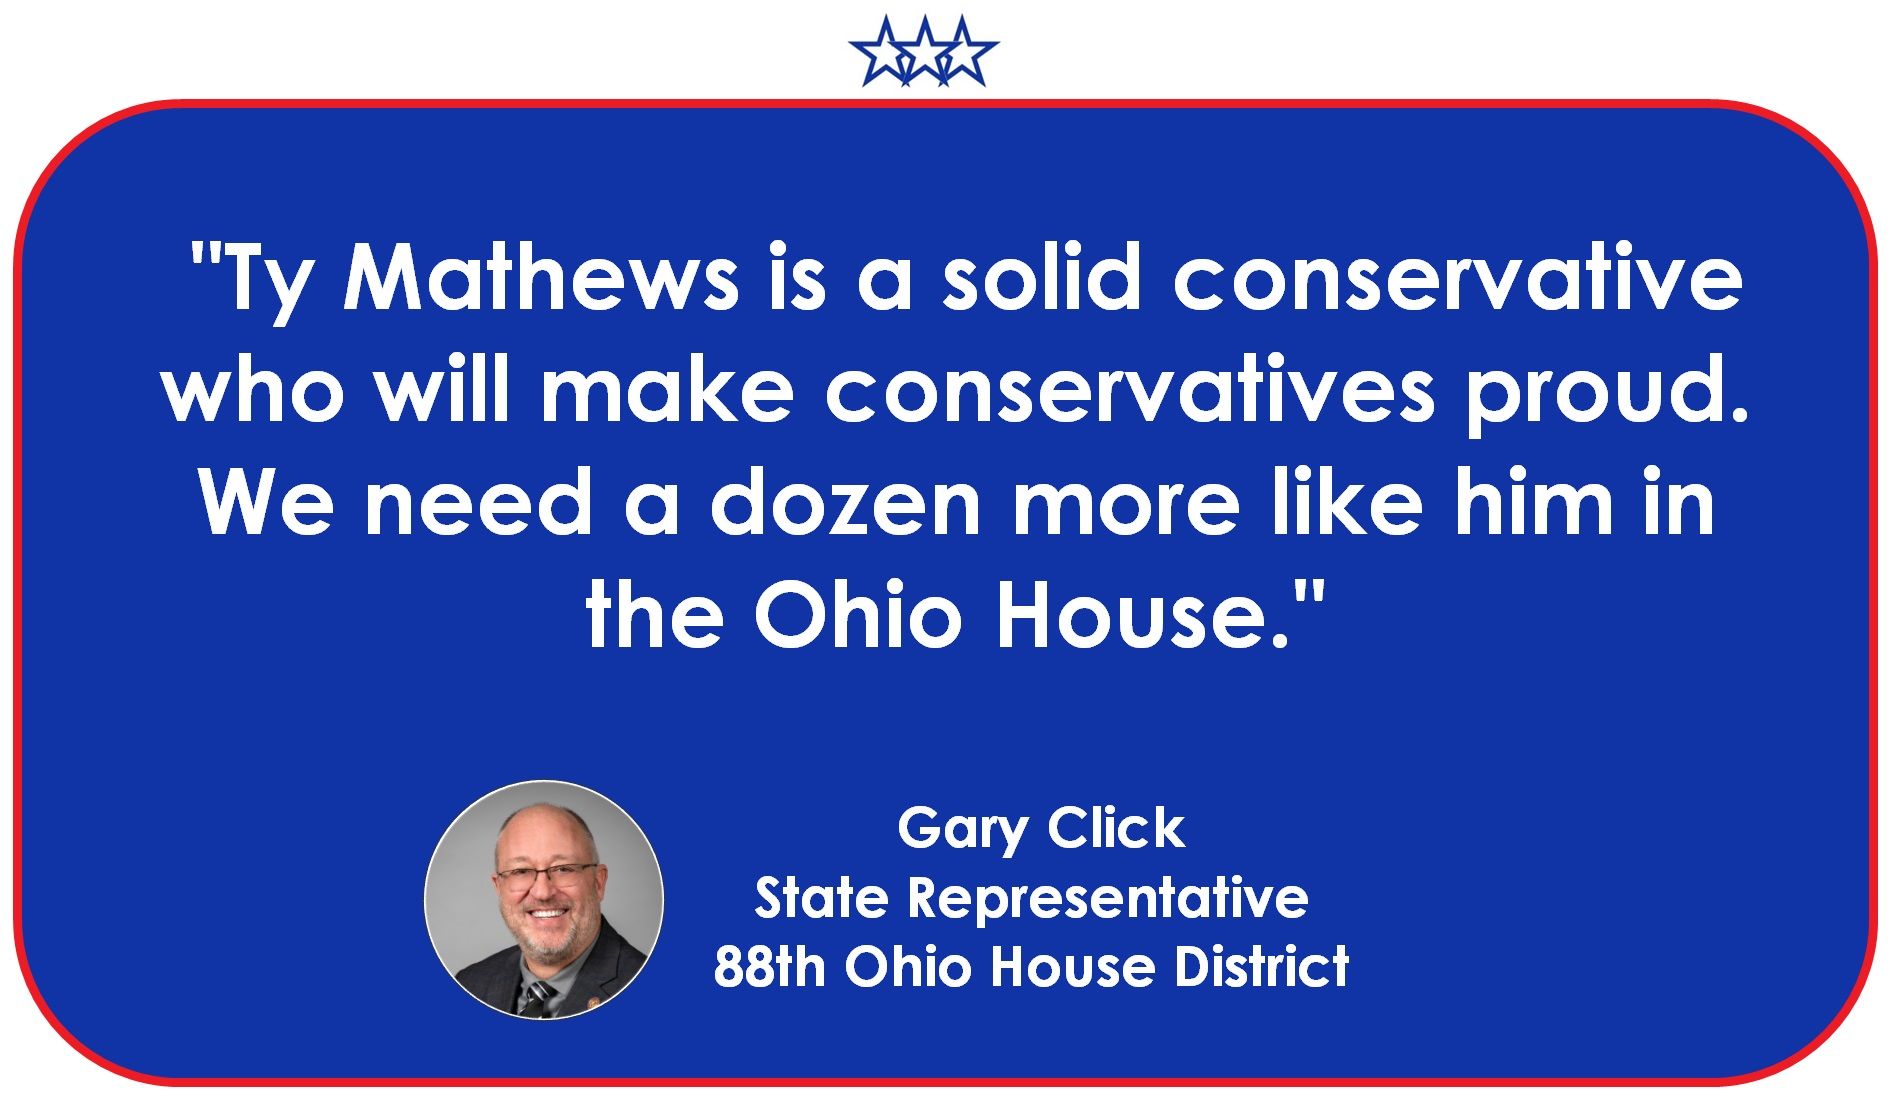 Gary Click endorsement of Ty Mathews for State Representative
